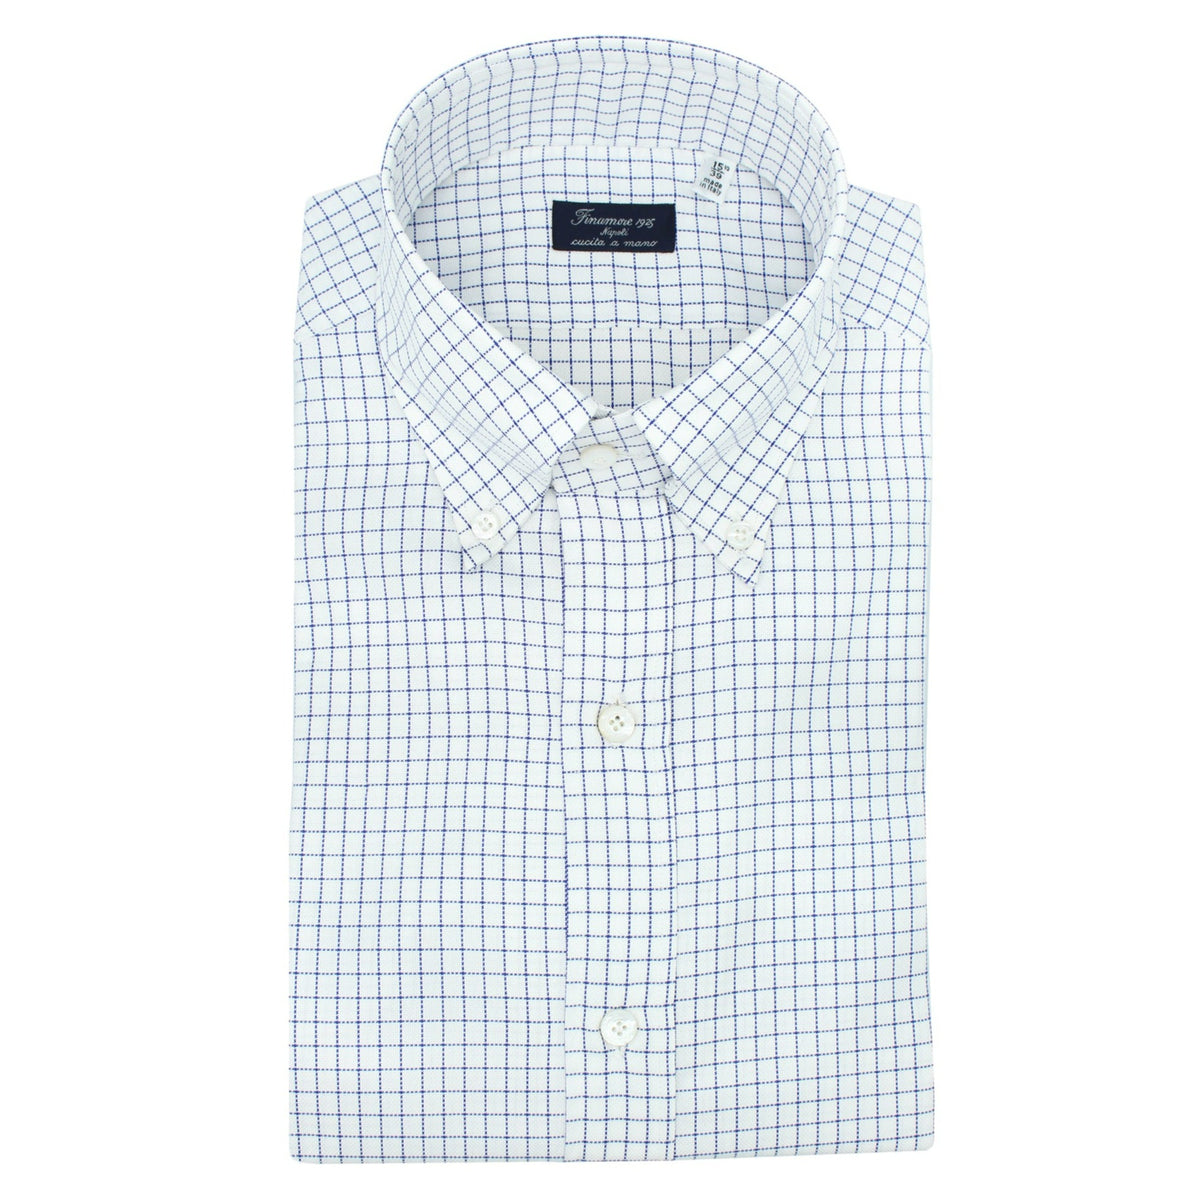 Classic Naples white cotton oxford shirt with blue checks